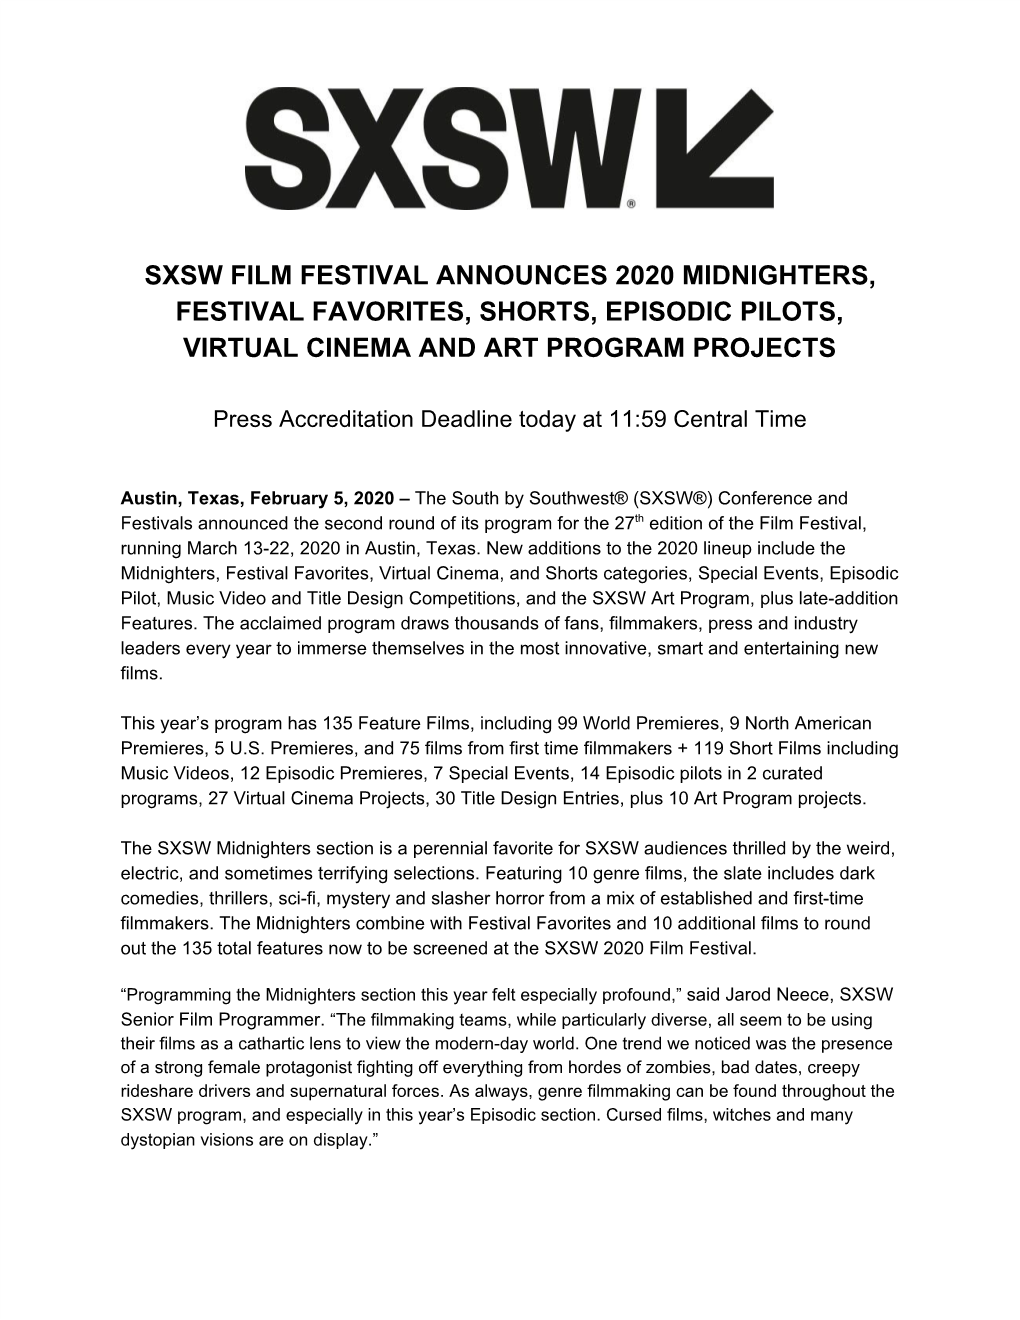 Sxsw Film Festival Announces 2020 Midnighters, Festival Favorites, Shorts, Episodic Pilots, Virtual Cinema and Art Program Projects